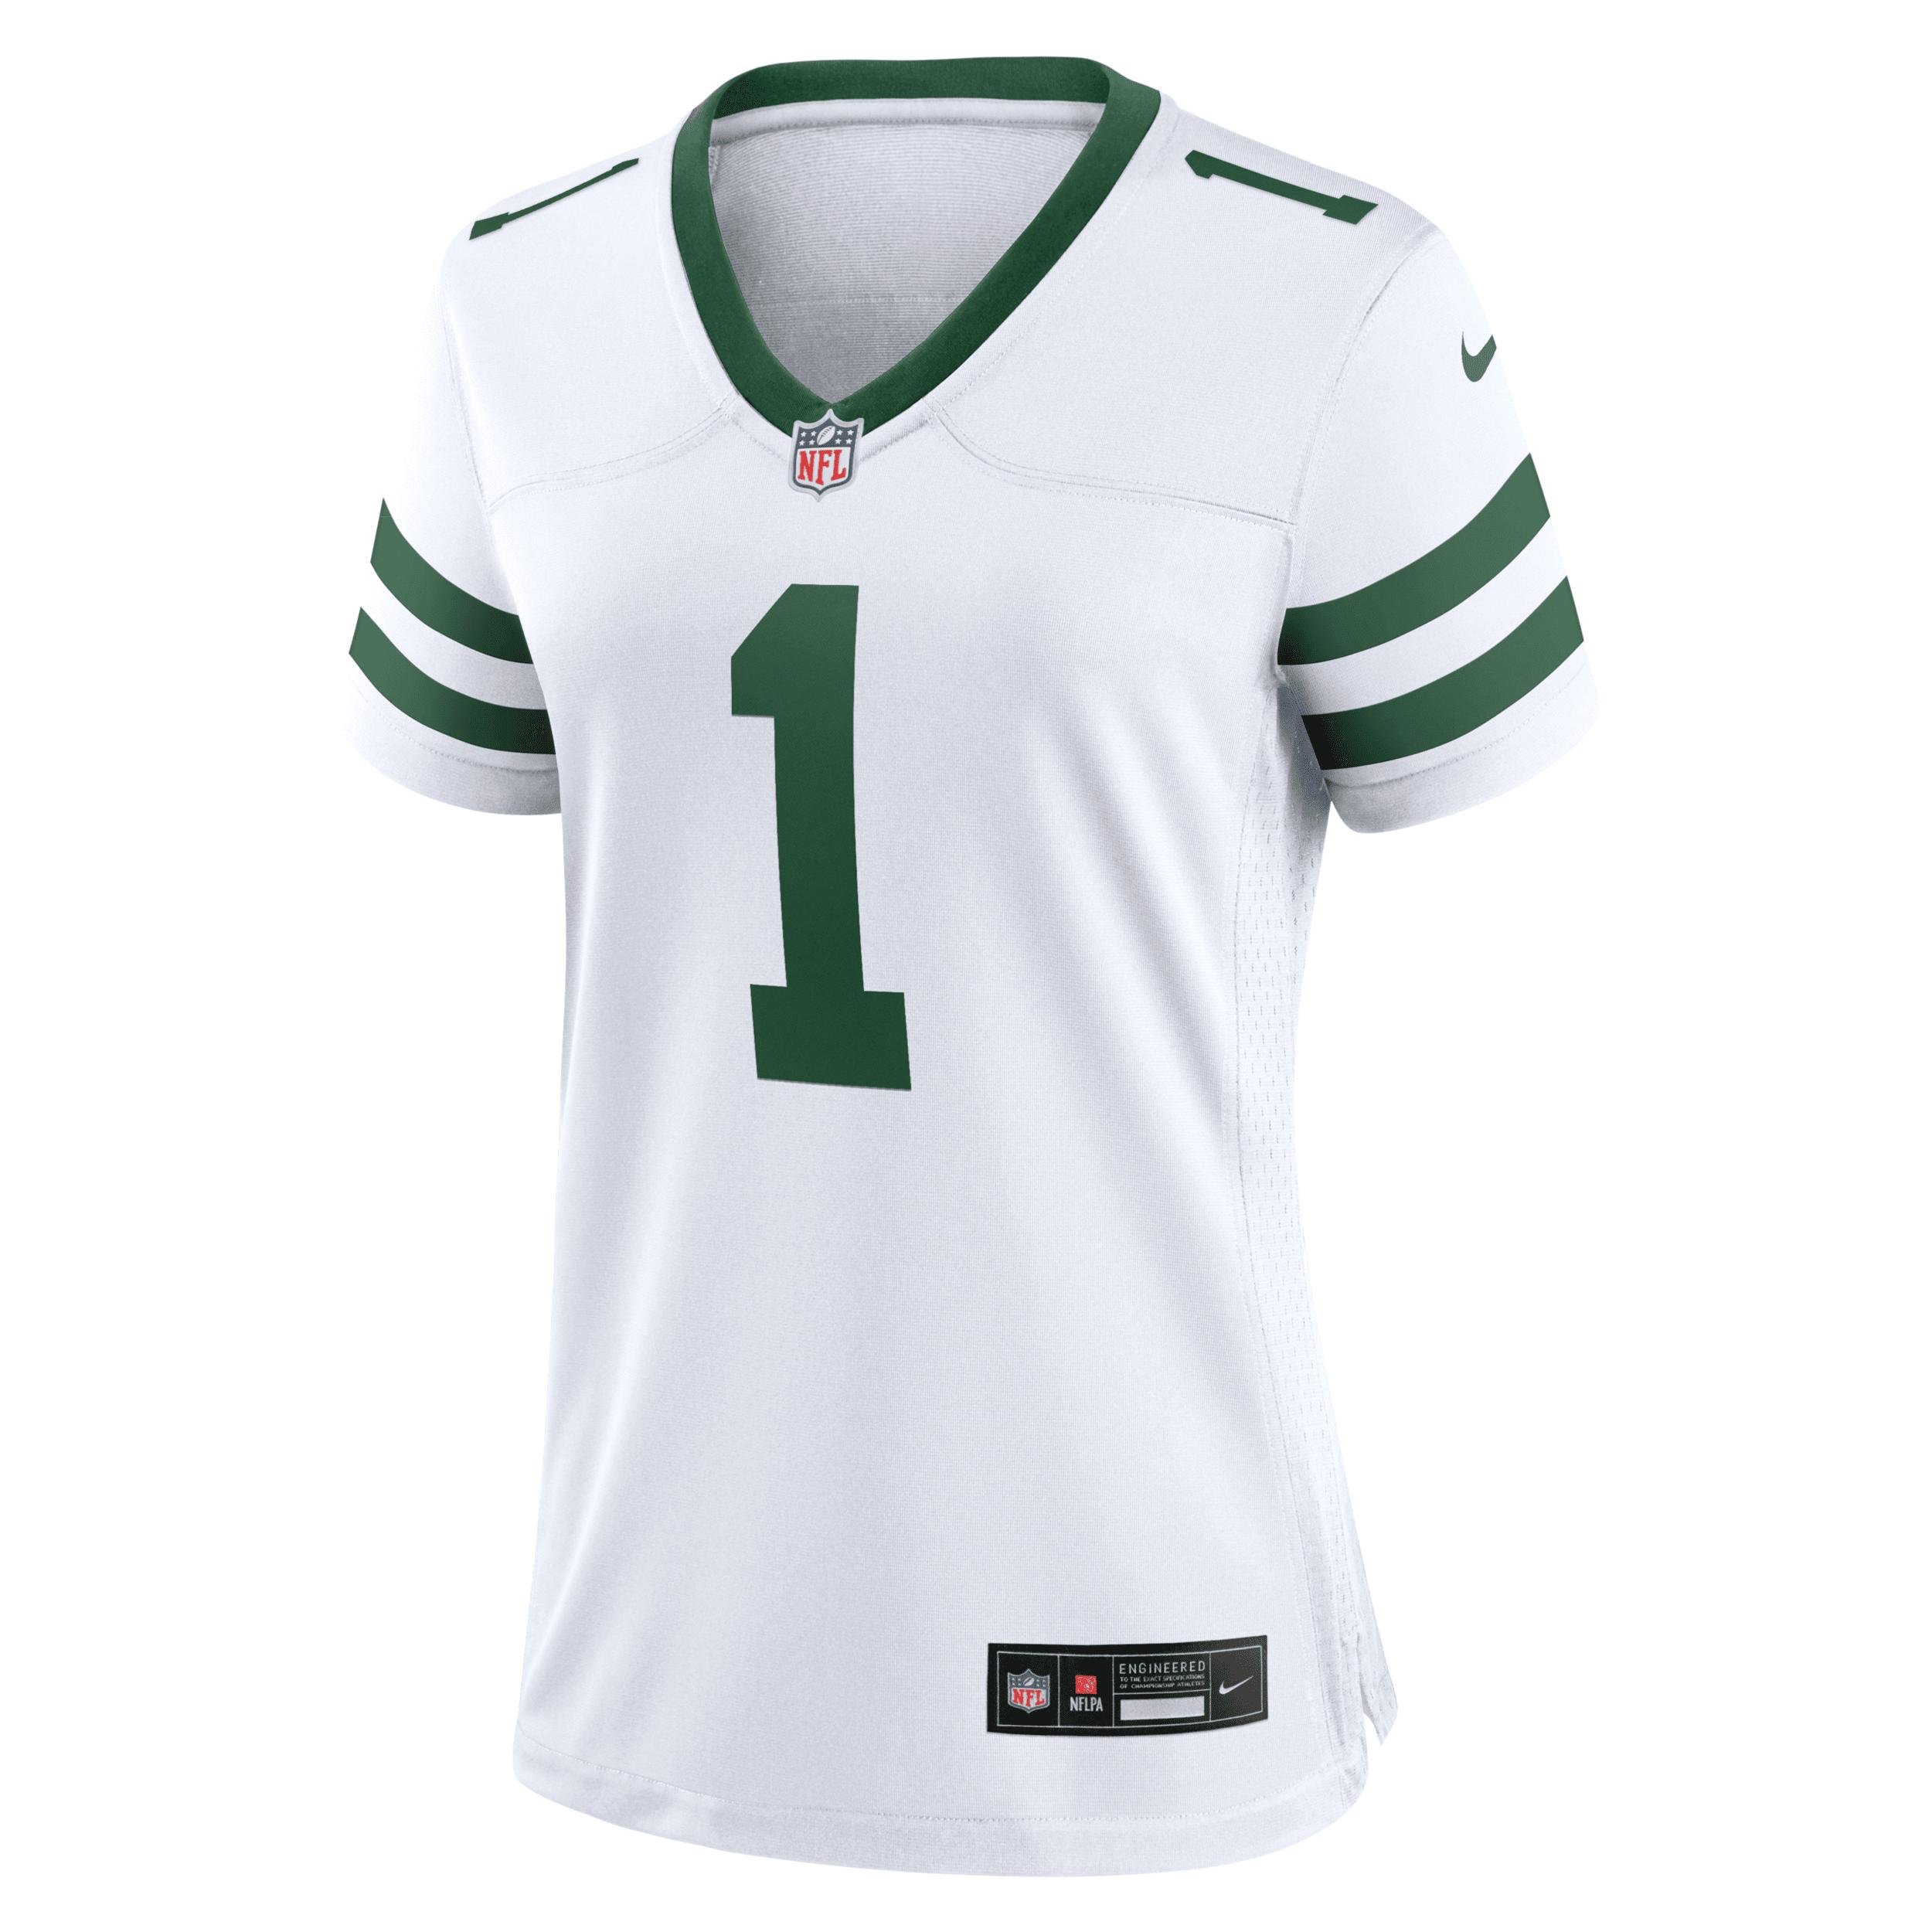 Sauce Gardner New York Jets Nike Women's NFL Game Football Jersey by NIKE